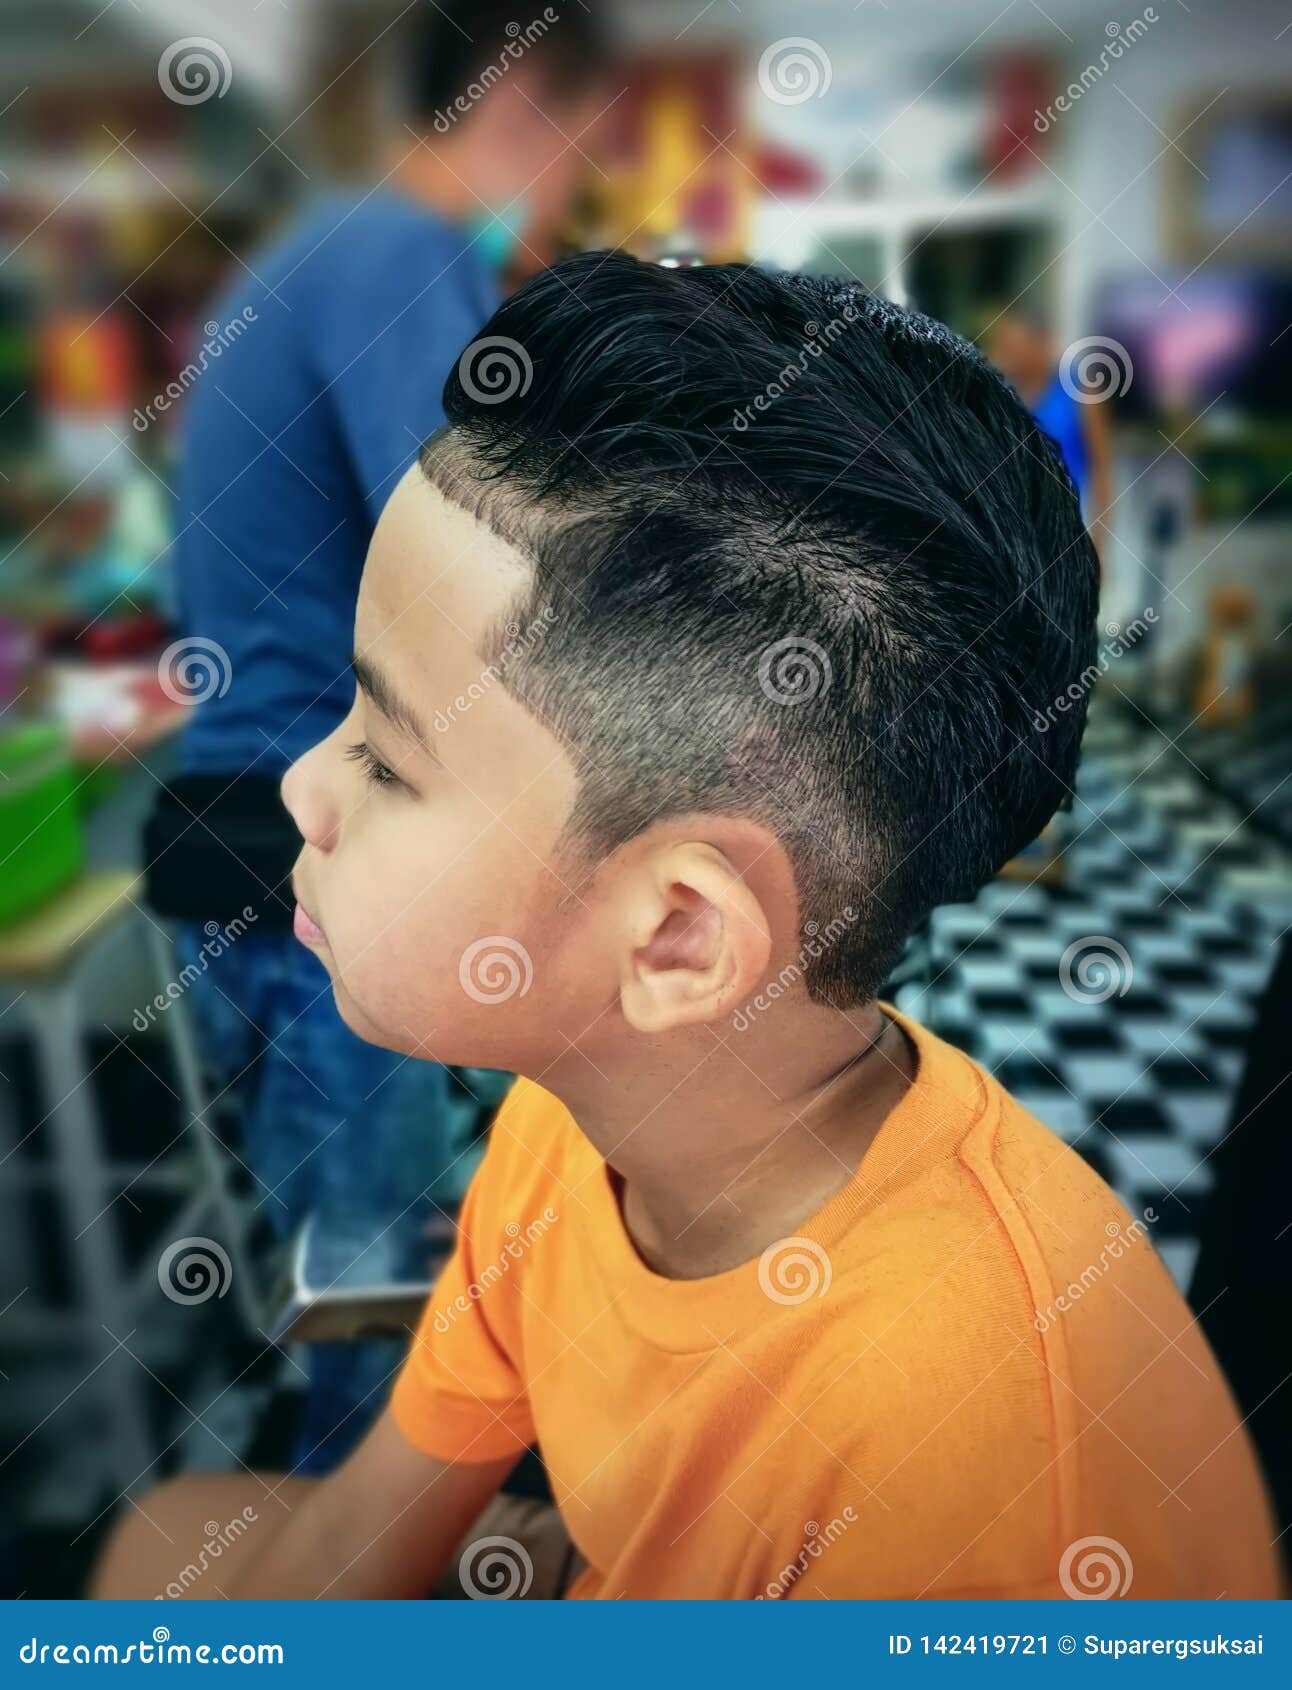 asian boy wearing t shirt getting new hair cut barber shop asian boy wearing casual t shirt getting new hair cut barber shop 142419721